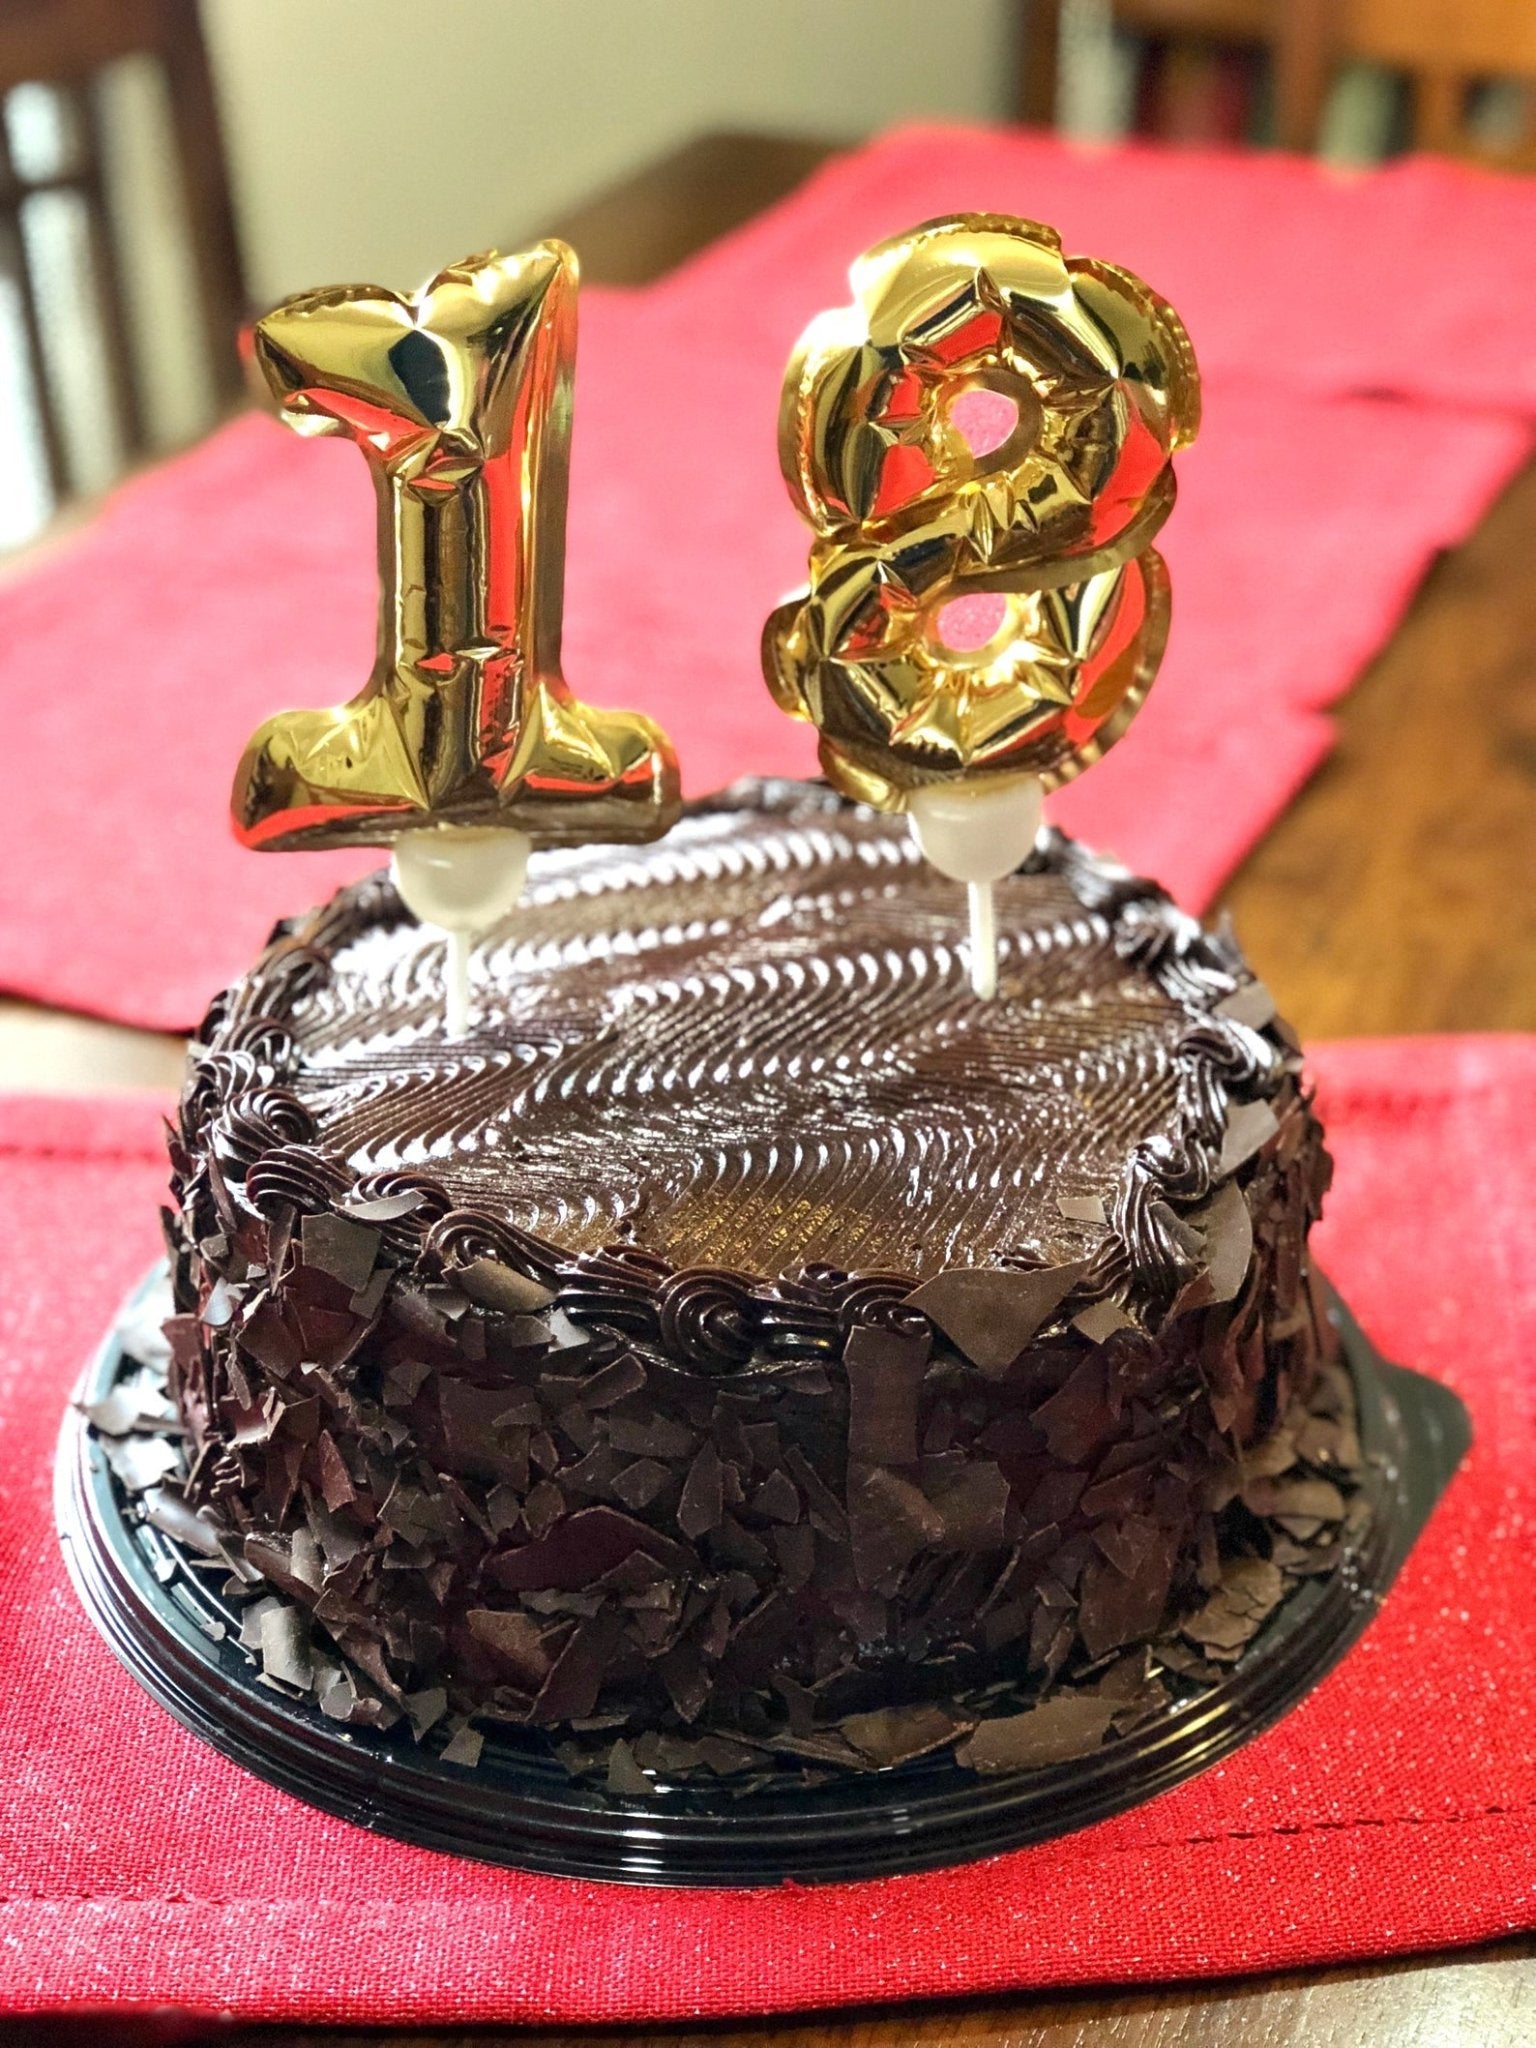 Handbag Cake for Eve's 21st Birthday